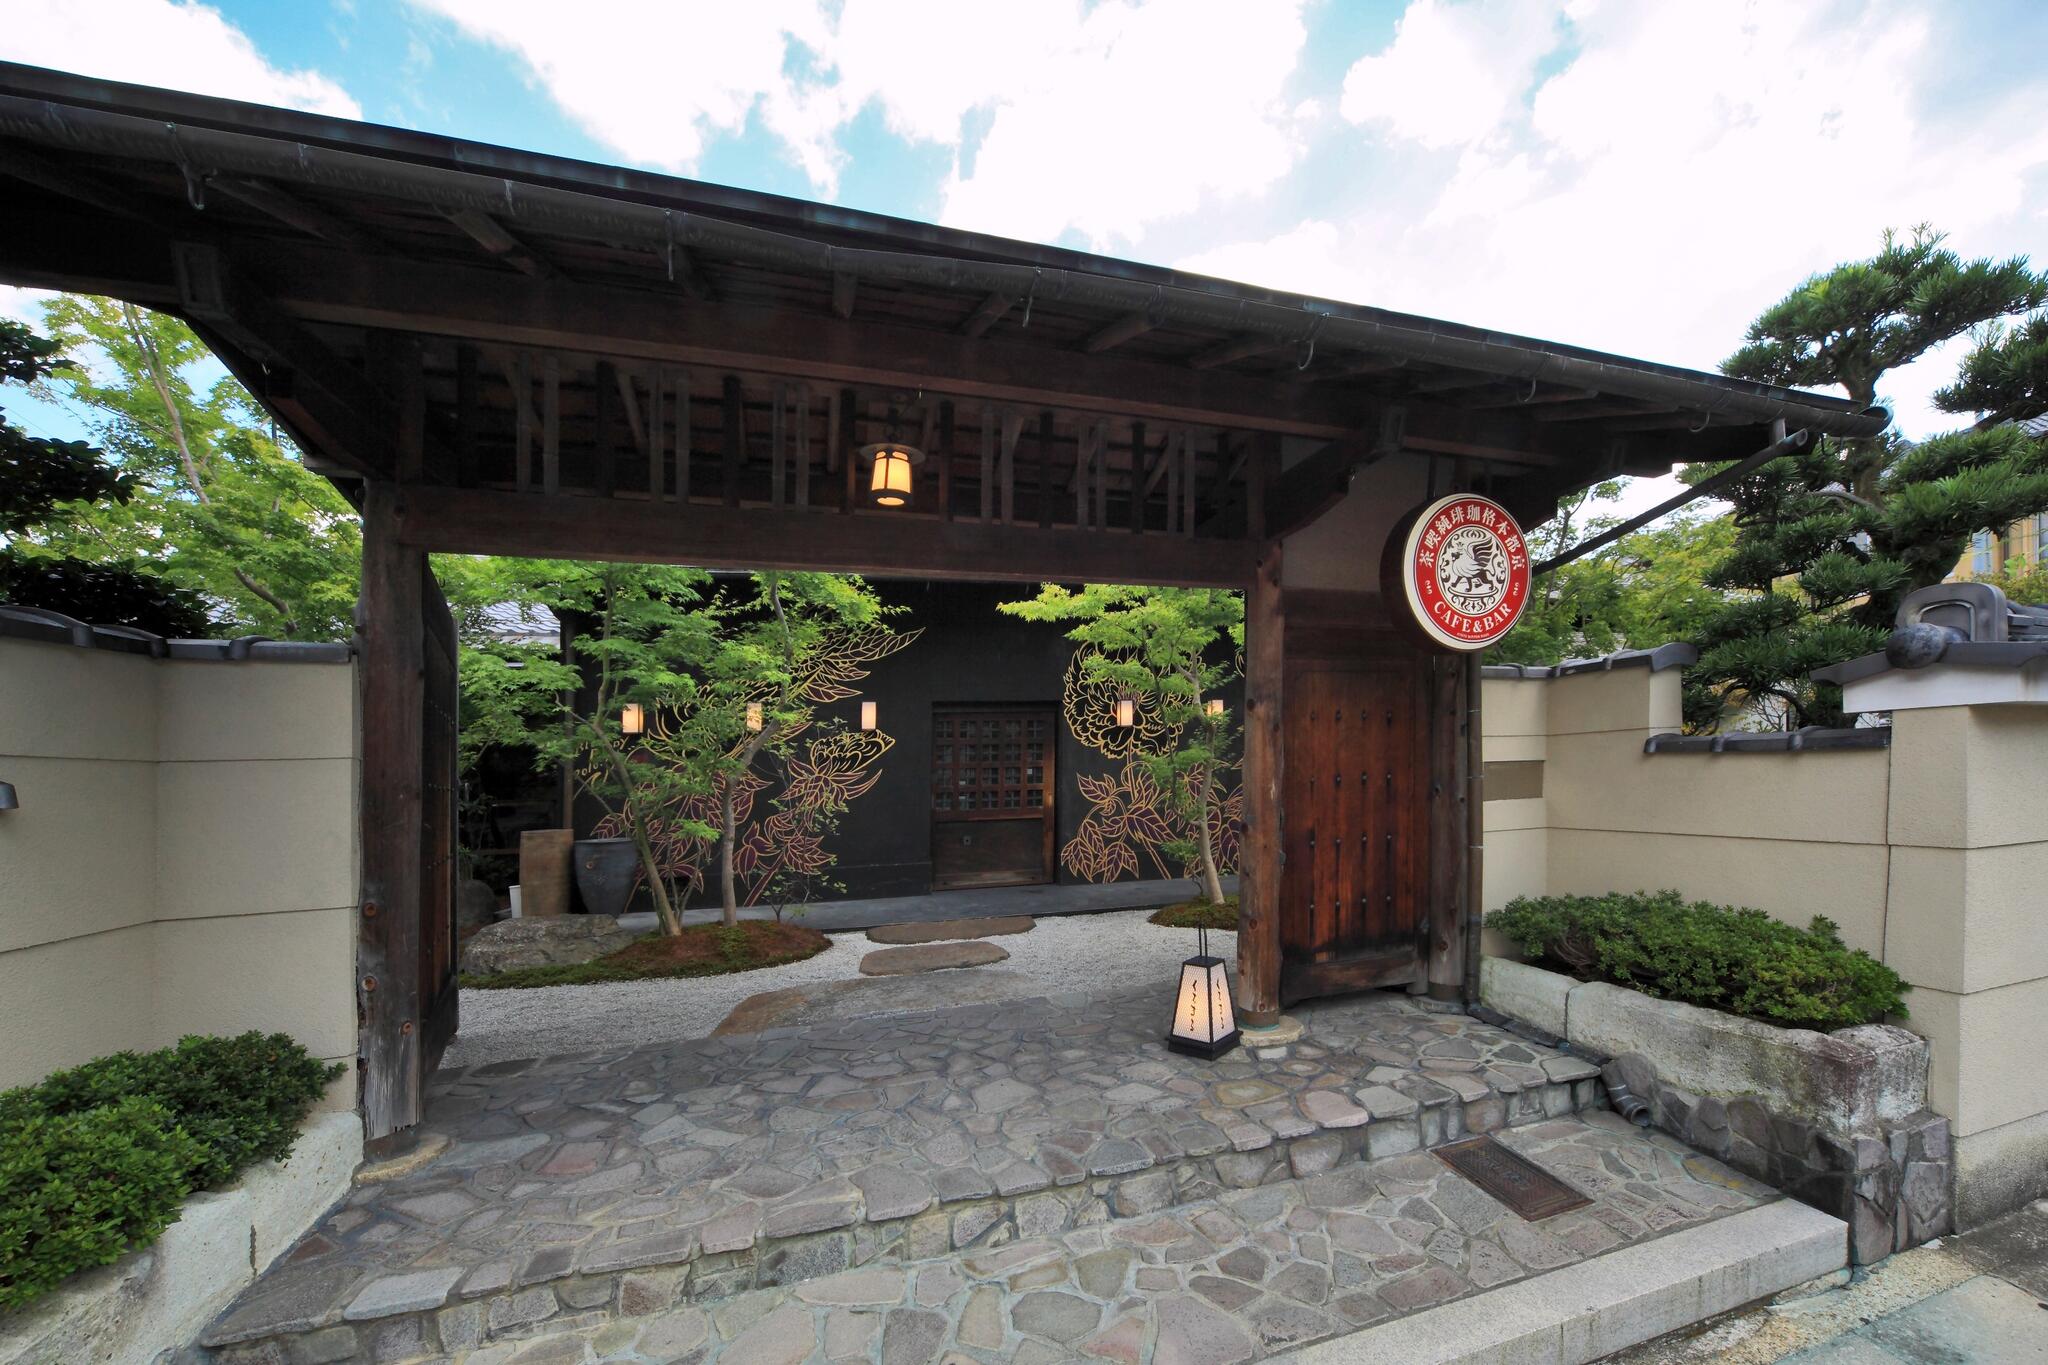 eX cafe京都嵐山本店の代表写真2